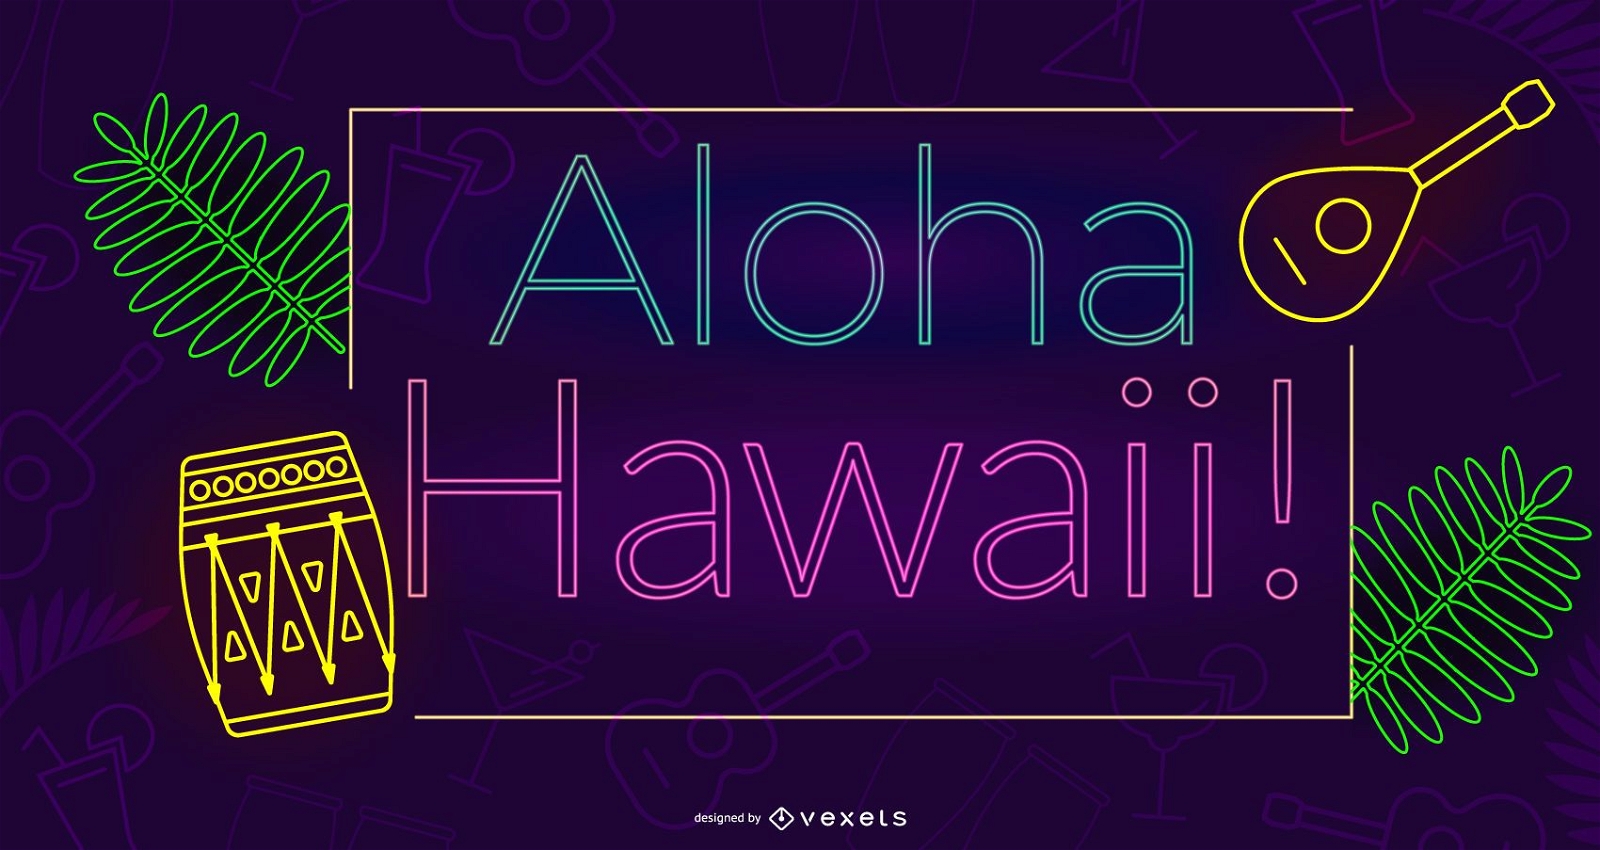 Aloha hawaii design neon